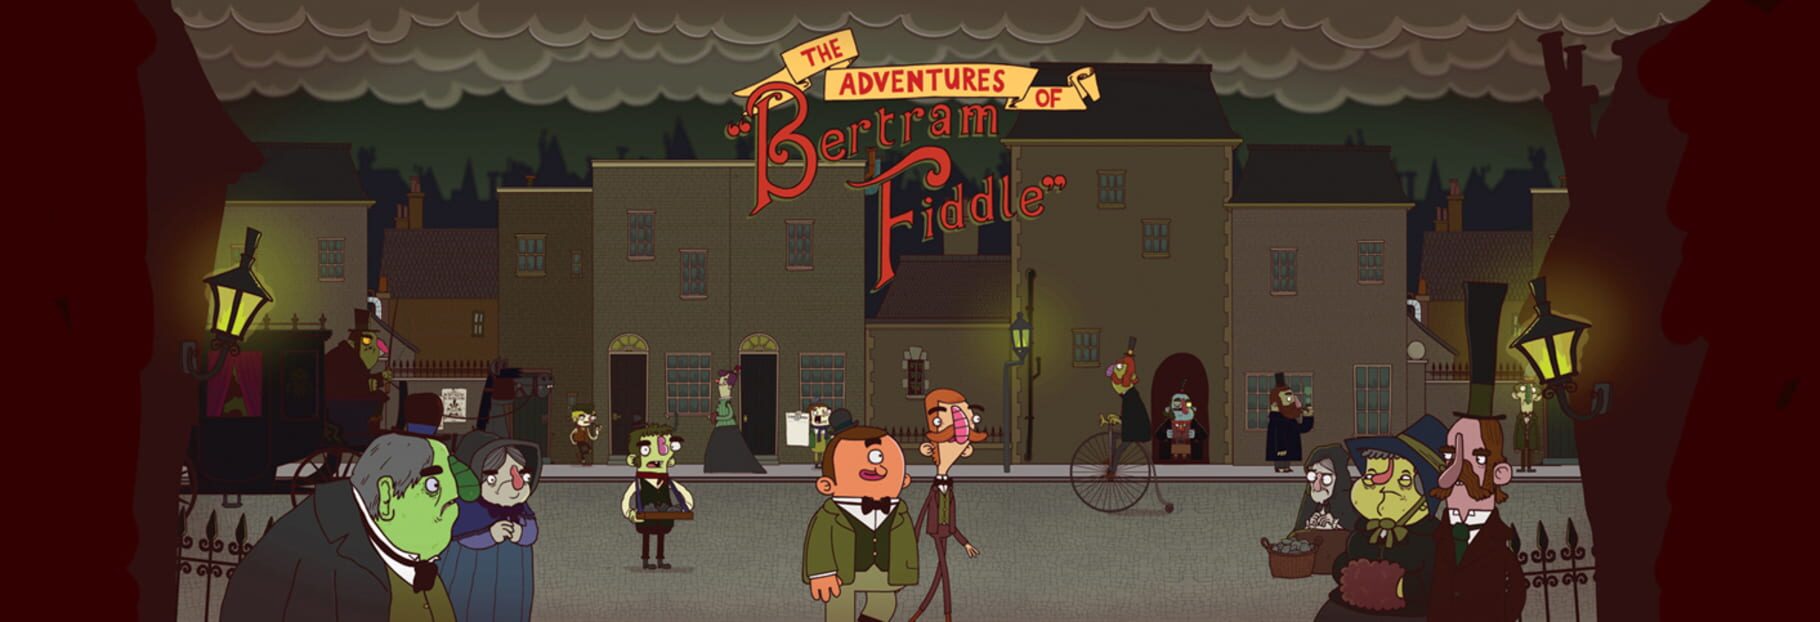 The Adventures of Bertram Fiddle: Episode 1 - A Dreadly Business artwork